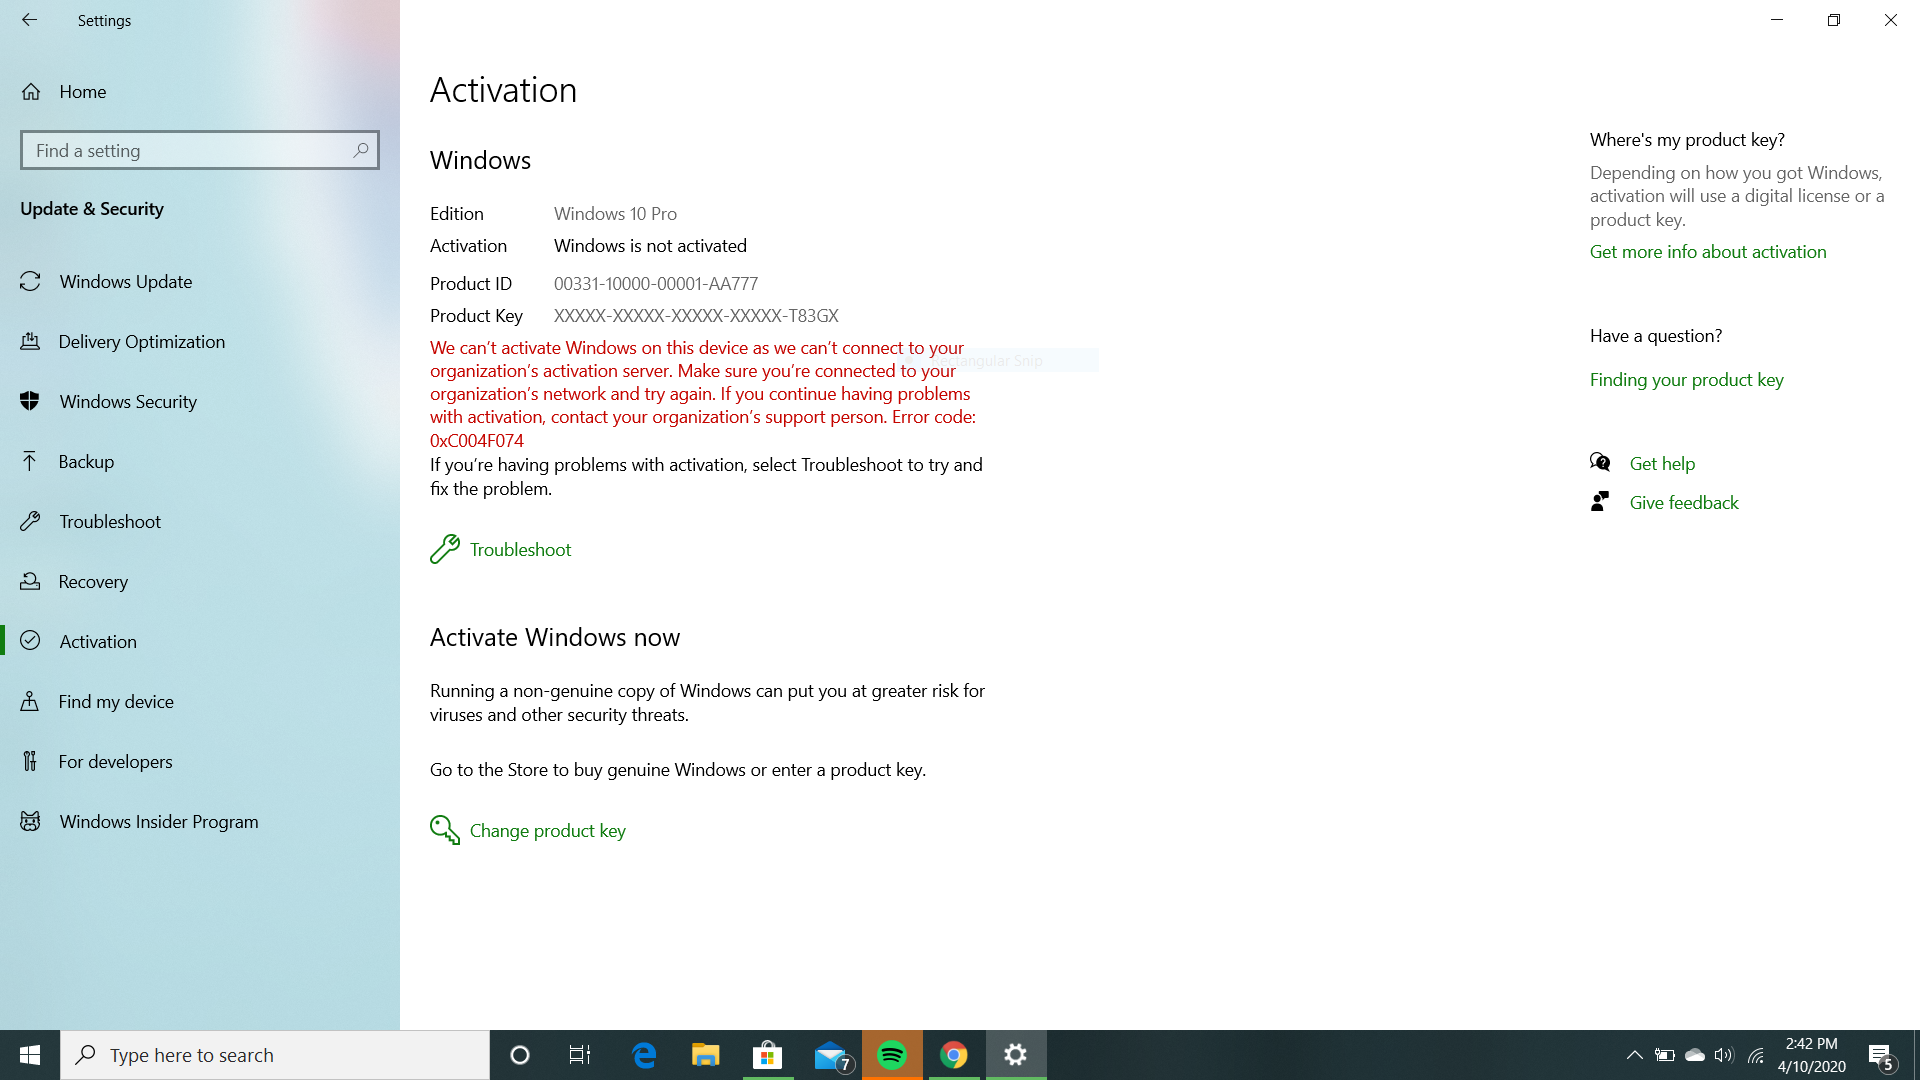 Not able to activate windows 10 009a9cd4-a92f-441e-a8e0-48c7c13175e6?upload=true.png